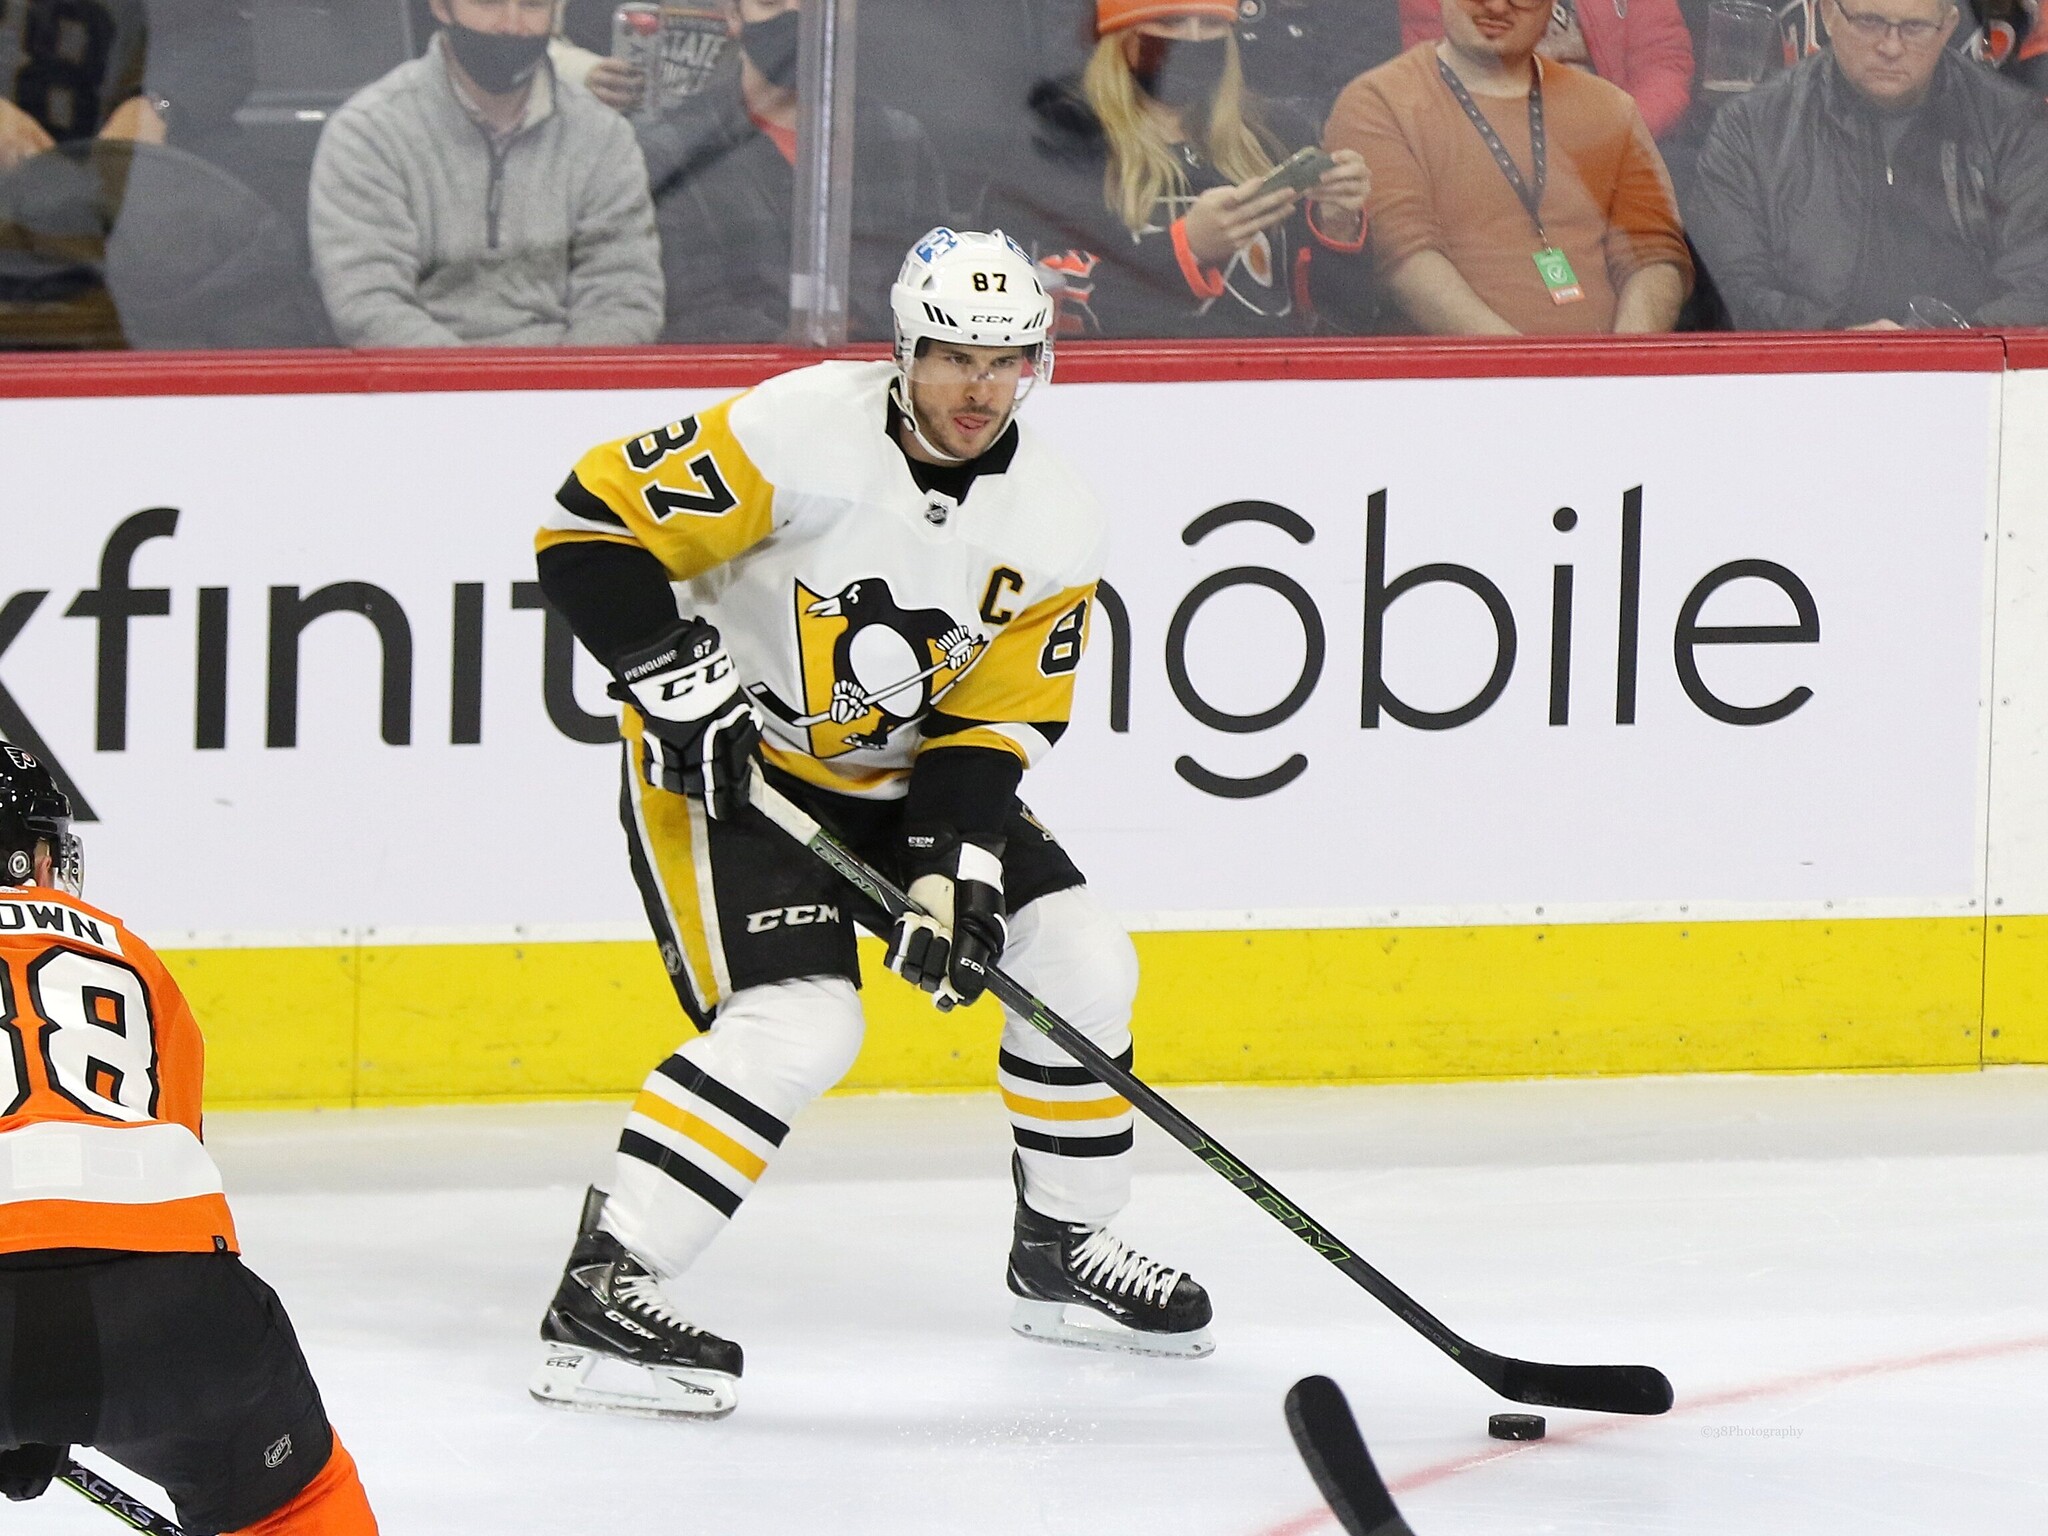 UPDATE: Entire QMJHL to retire Sidney Crosby's No. 87 jersey